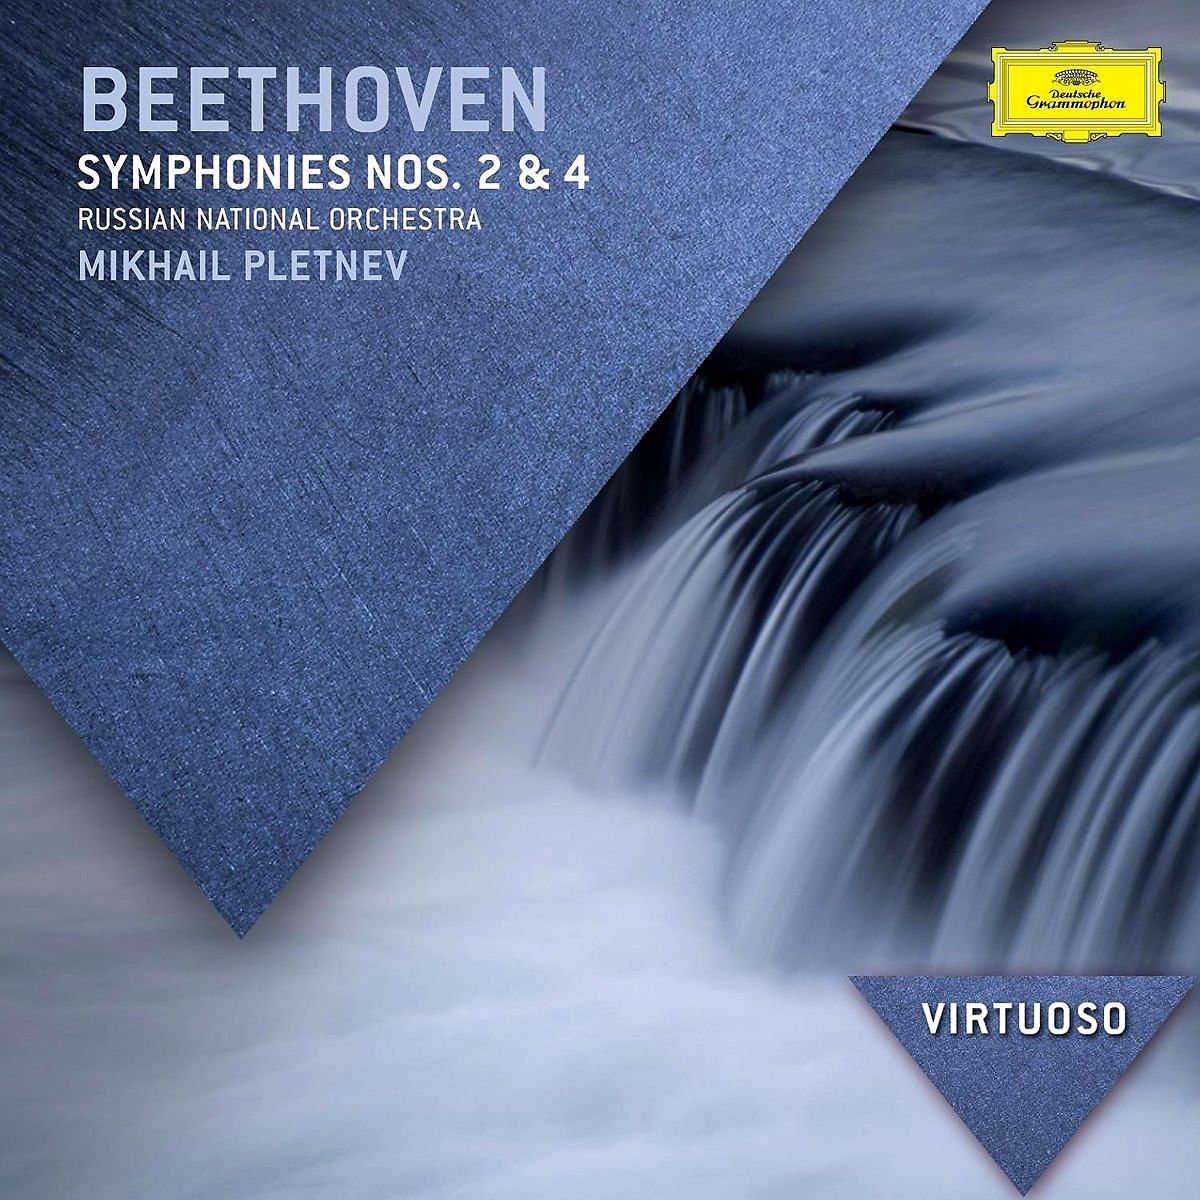 CD Beethoven - Symphonies nos. 2 & 4 - Mikhail Pletnev